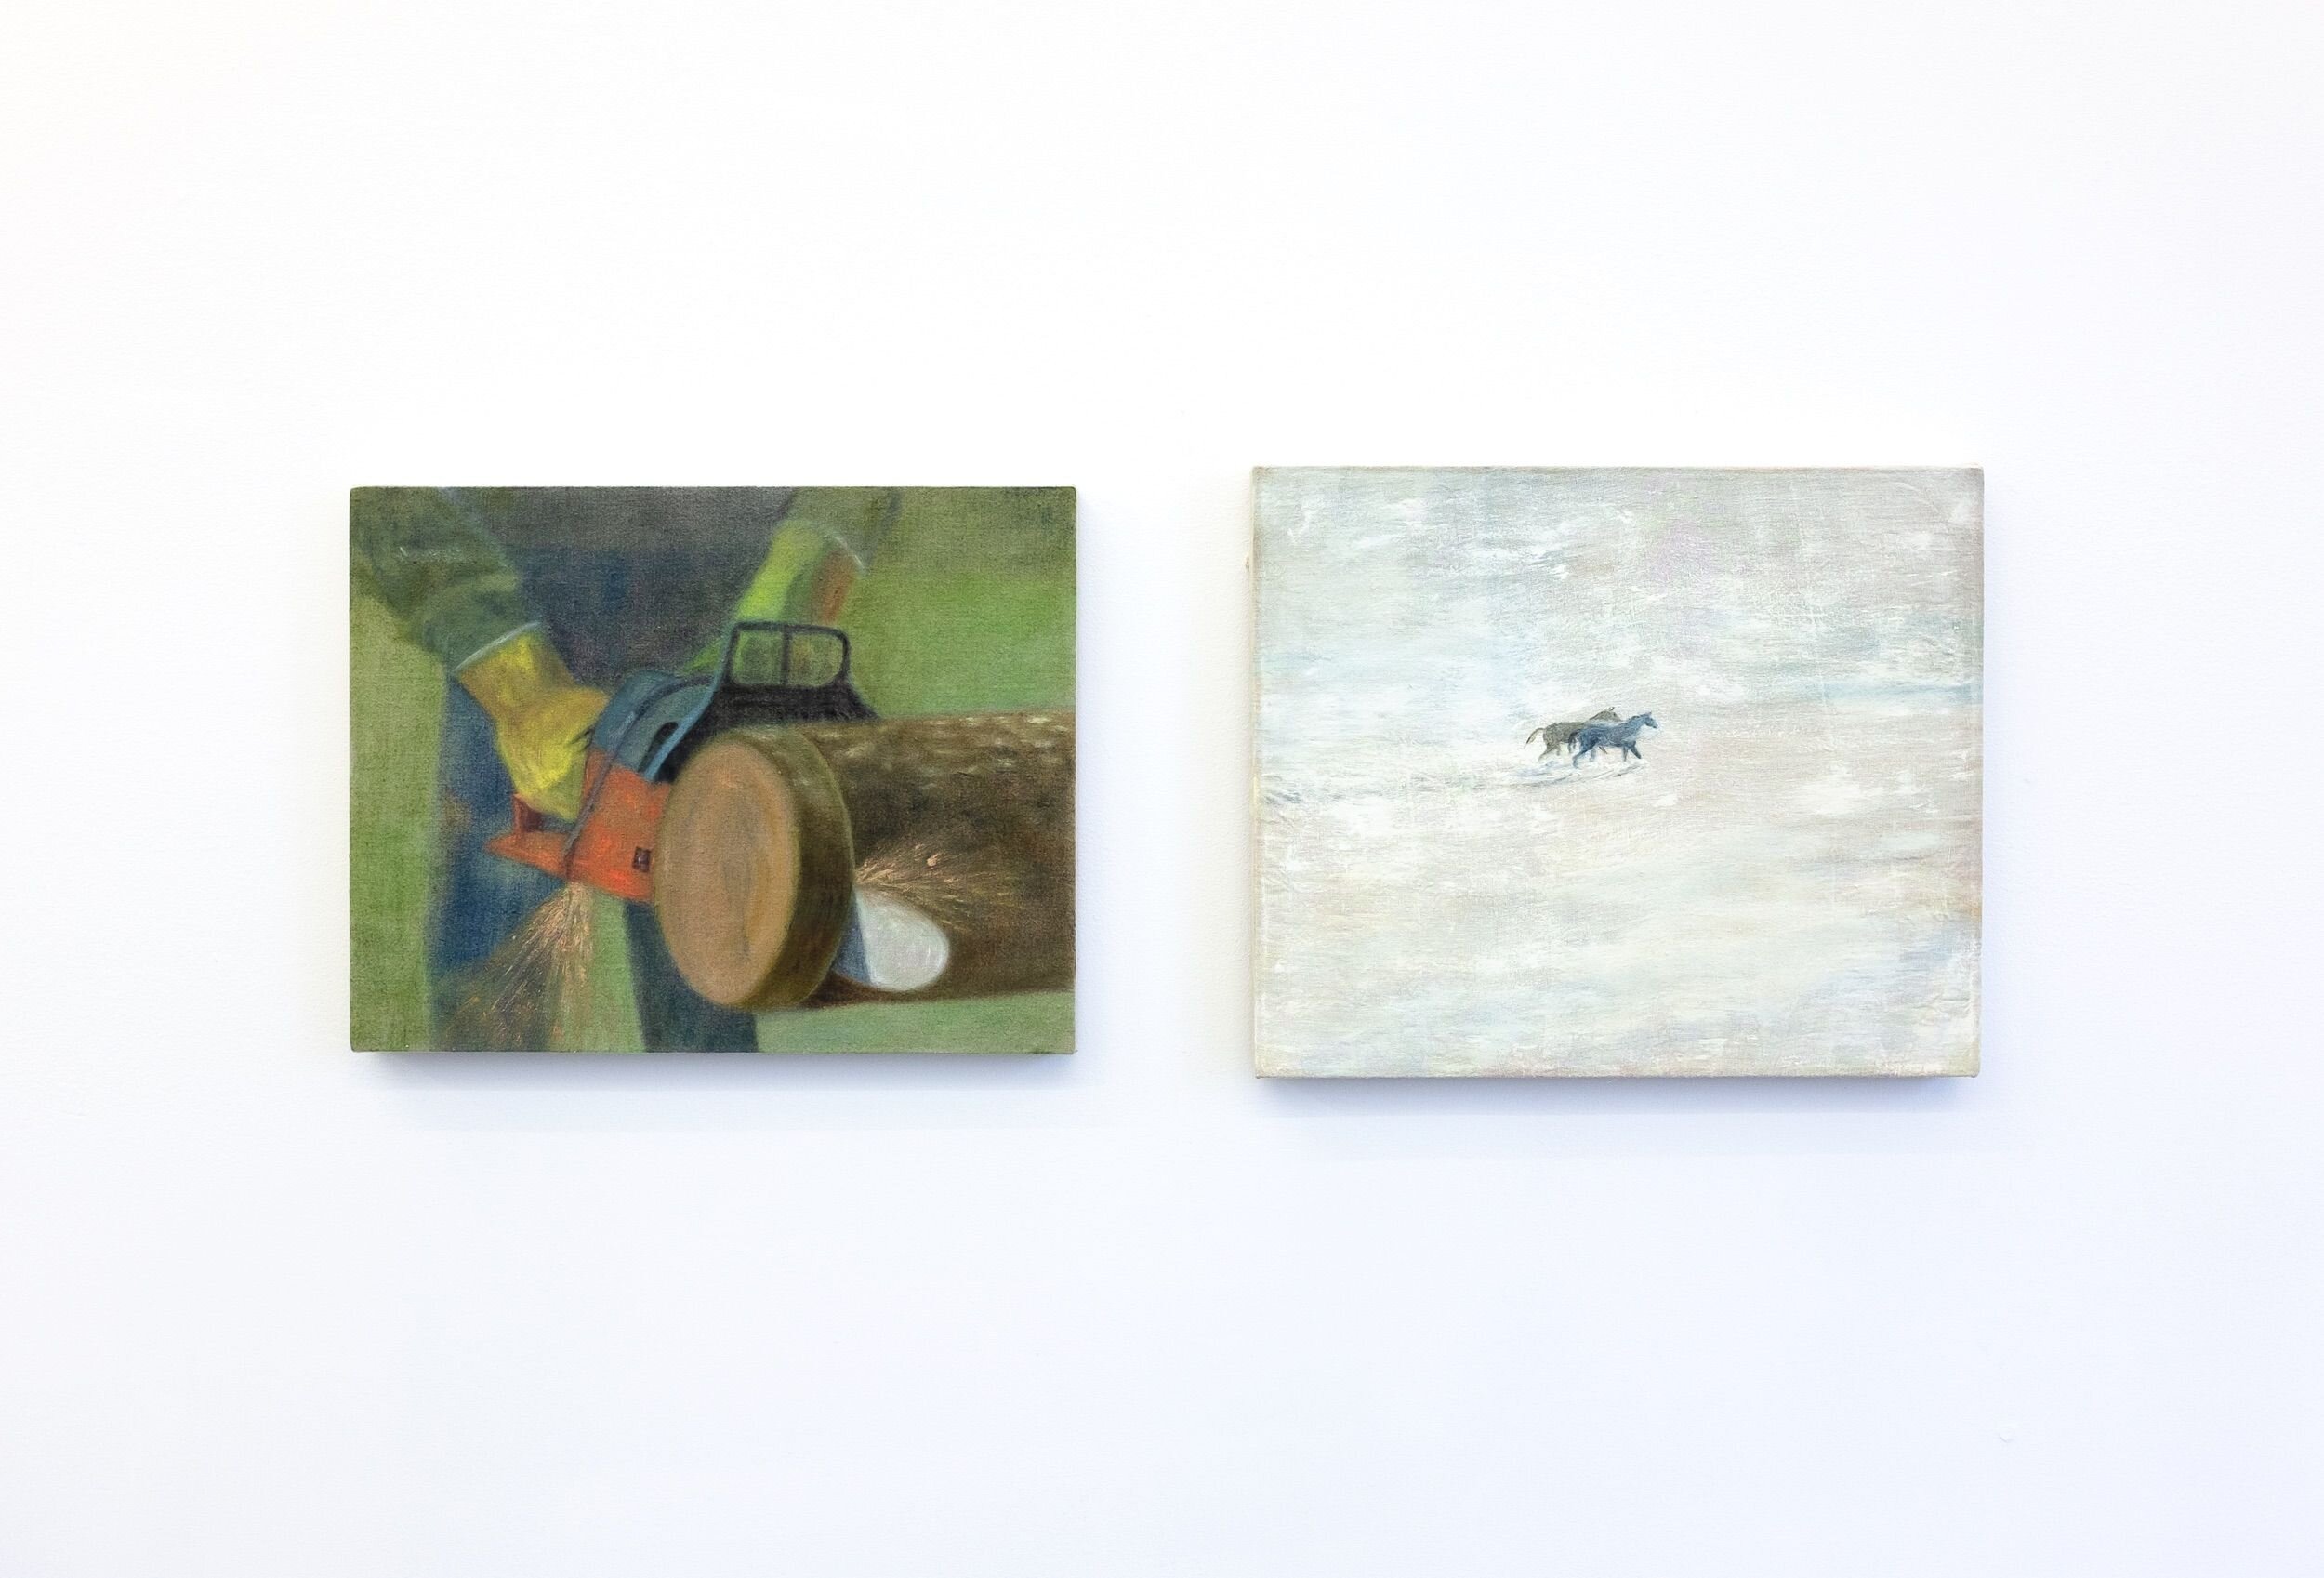  Left: Katelyn Eichwald  Chainsaw , 2020 Oil on linen 18 x 14 inches  Right:  Two Horses , 2020 Oil on linen 18 x 15 inches 